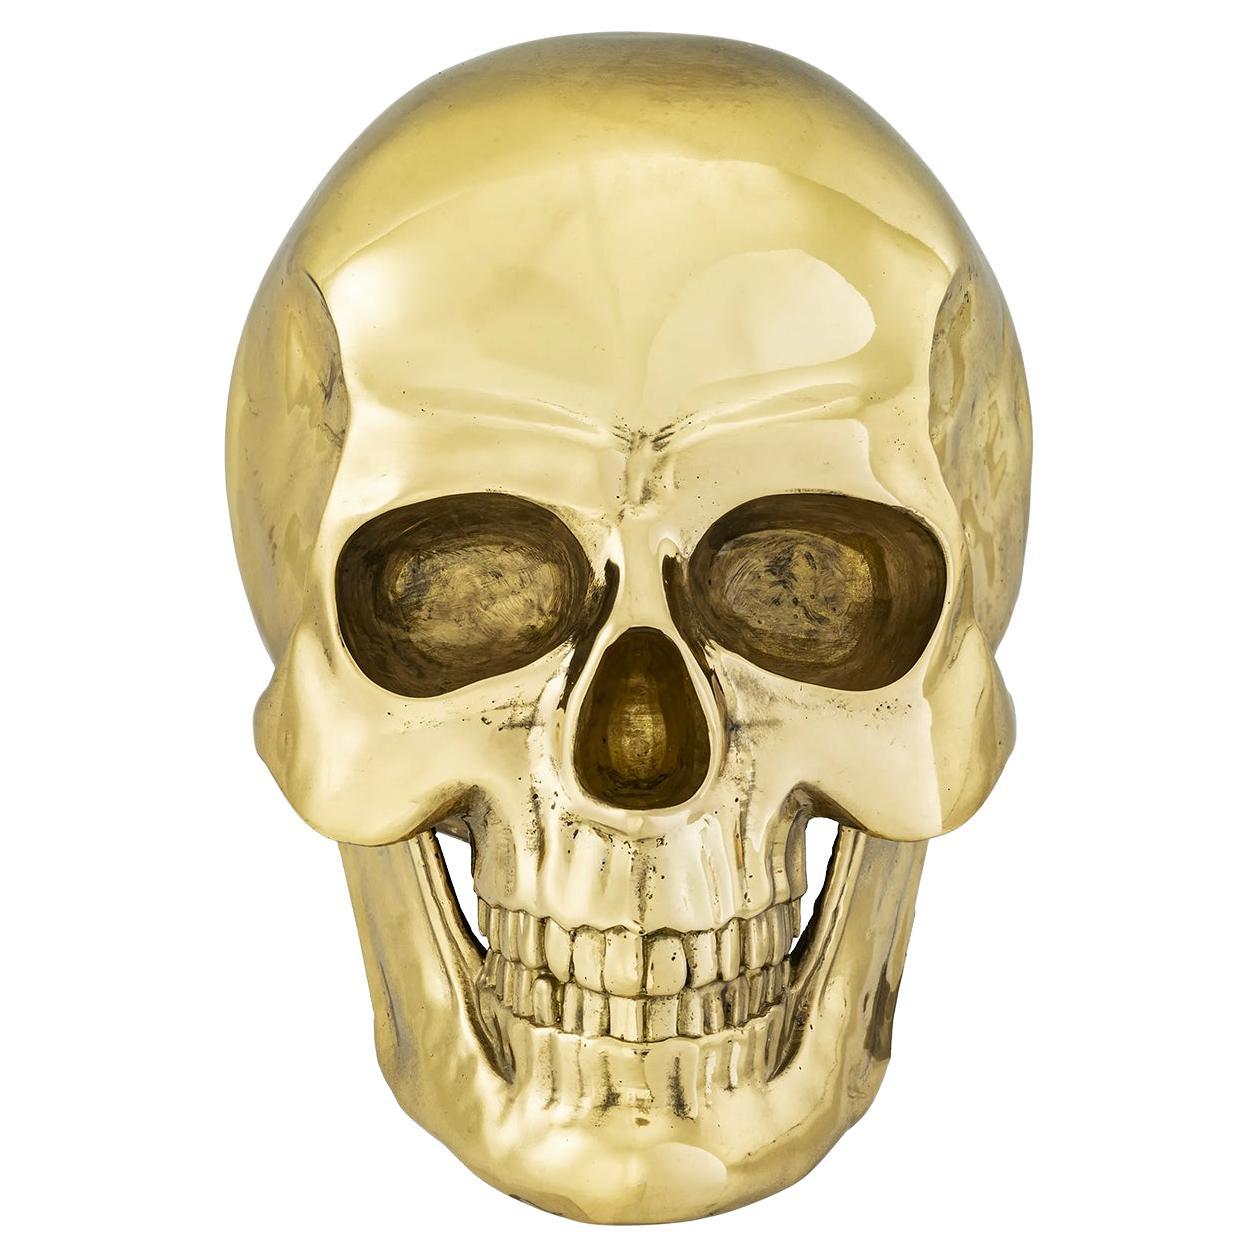 Brass Skull Sculpture